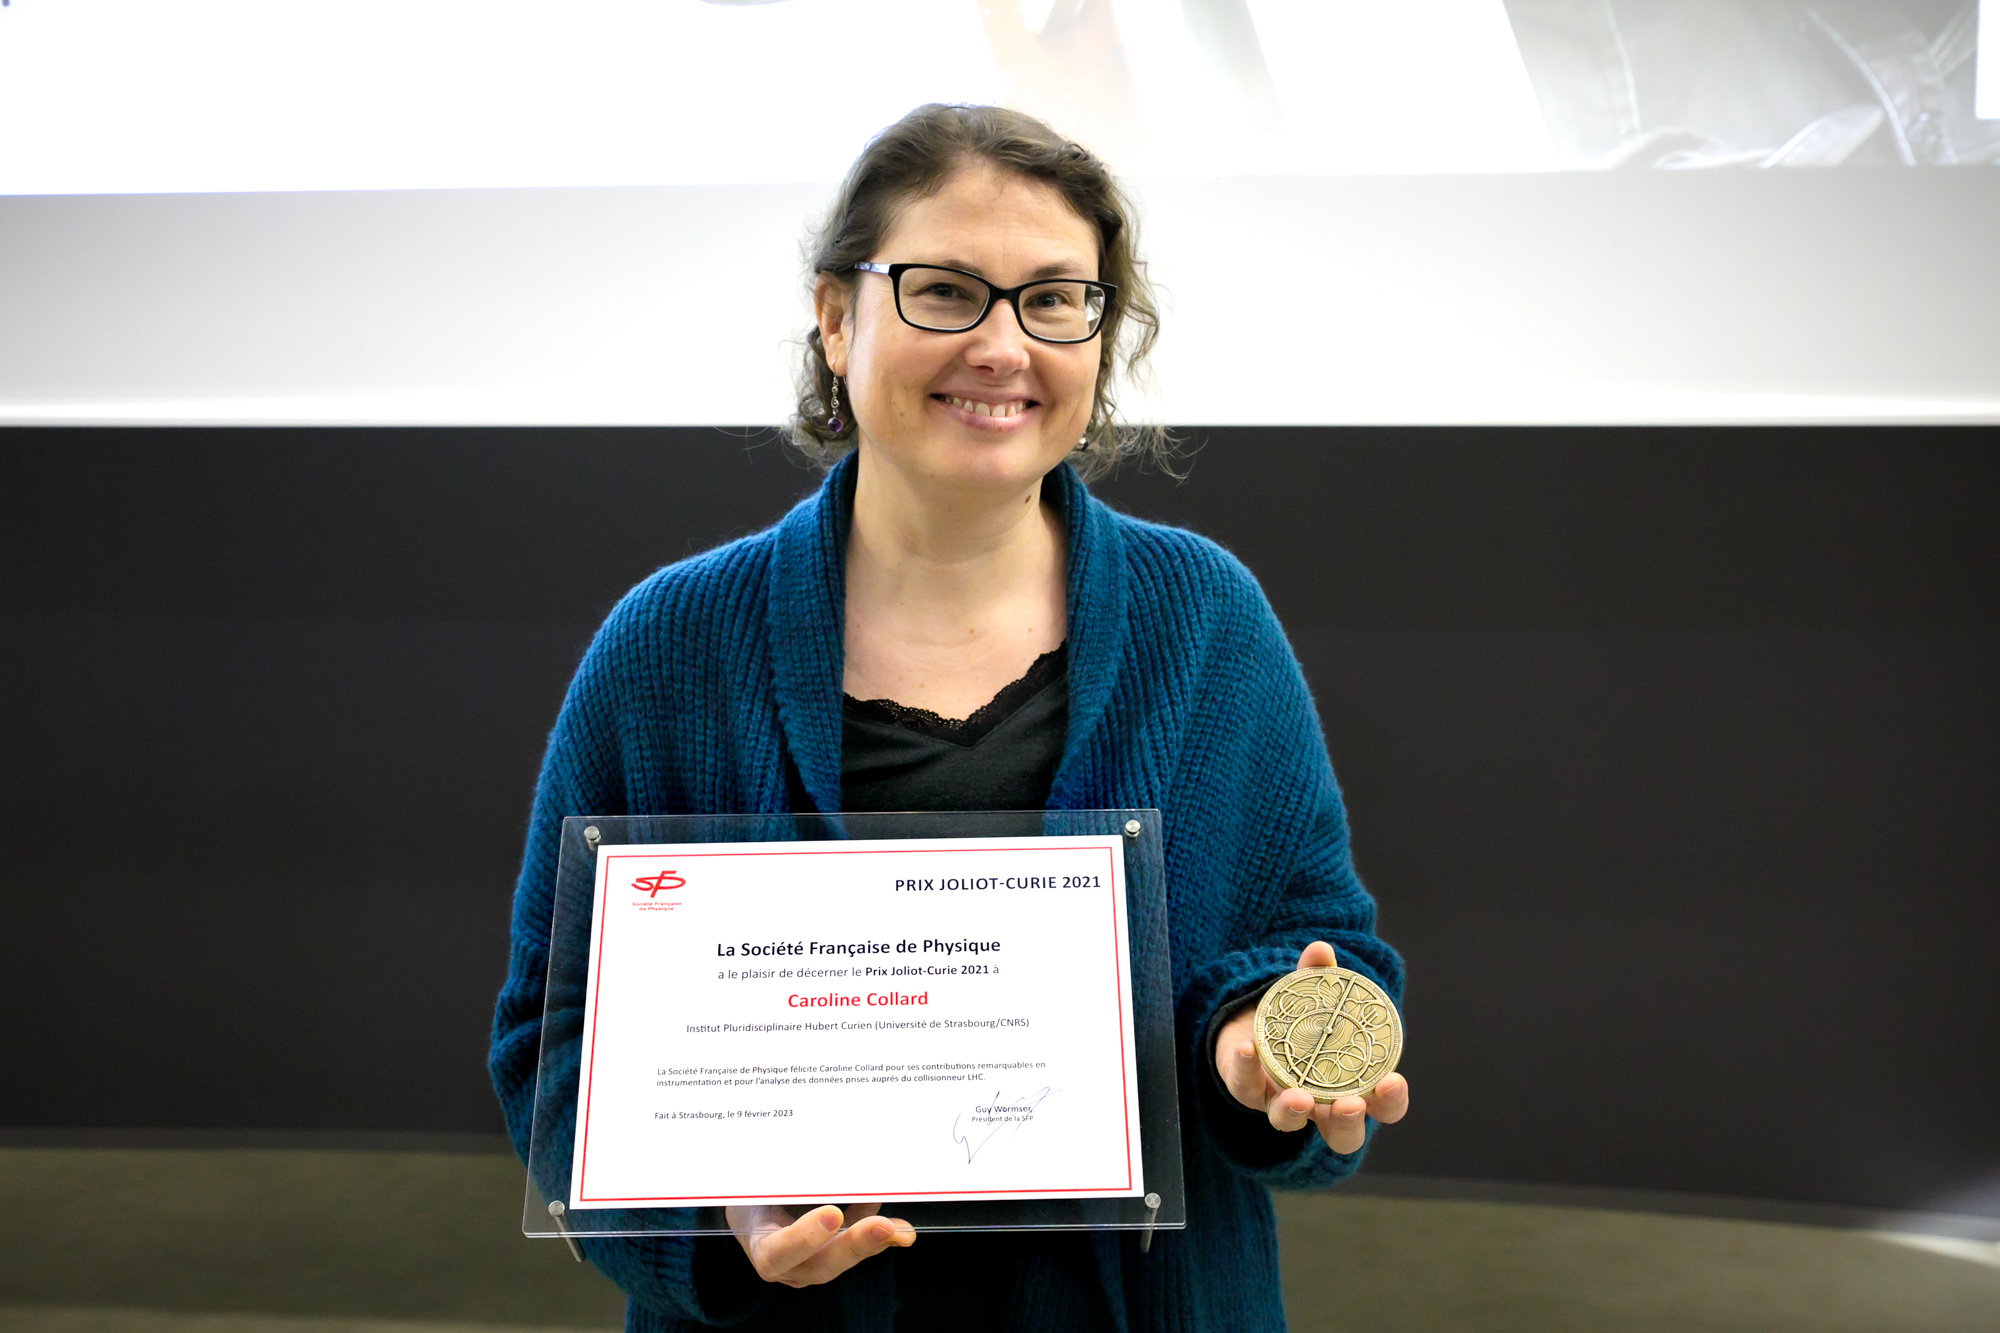 Caroline Collard, winner of Joliot-Curie Prize 2021, receiving her award. Credit: Nicolas Busser